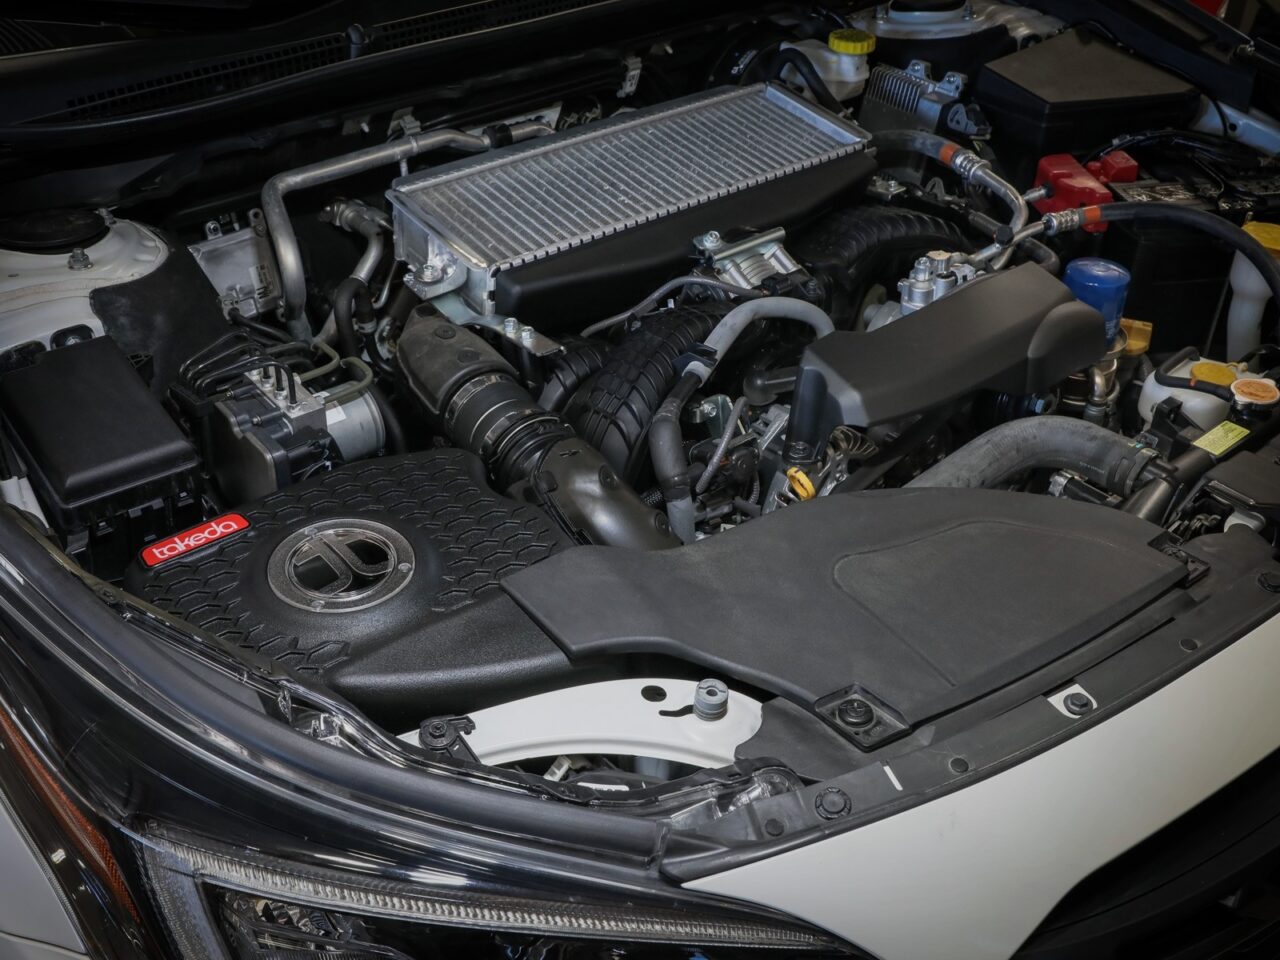 Sealed AFE Takeda Cold Air Intake on 2.4L turbo Subaru Outback